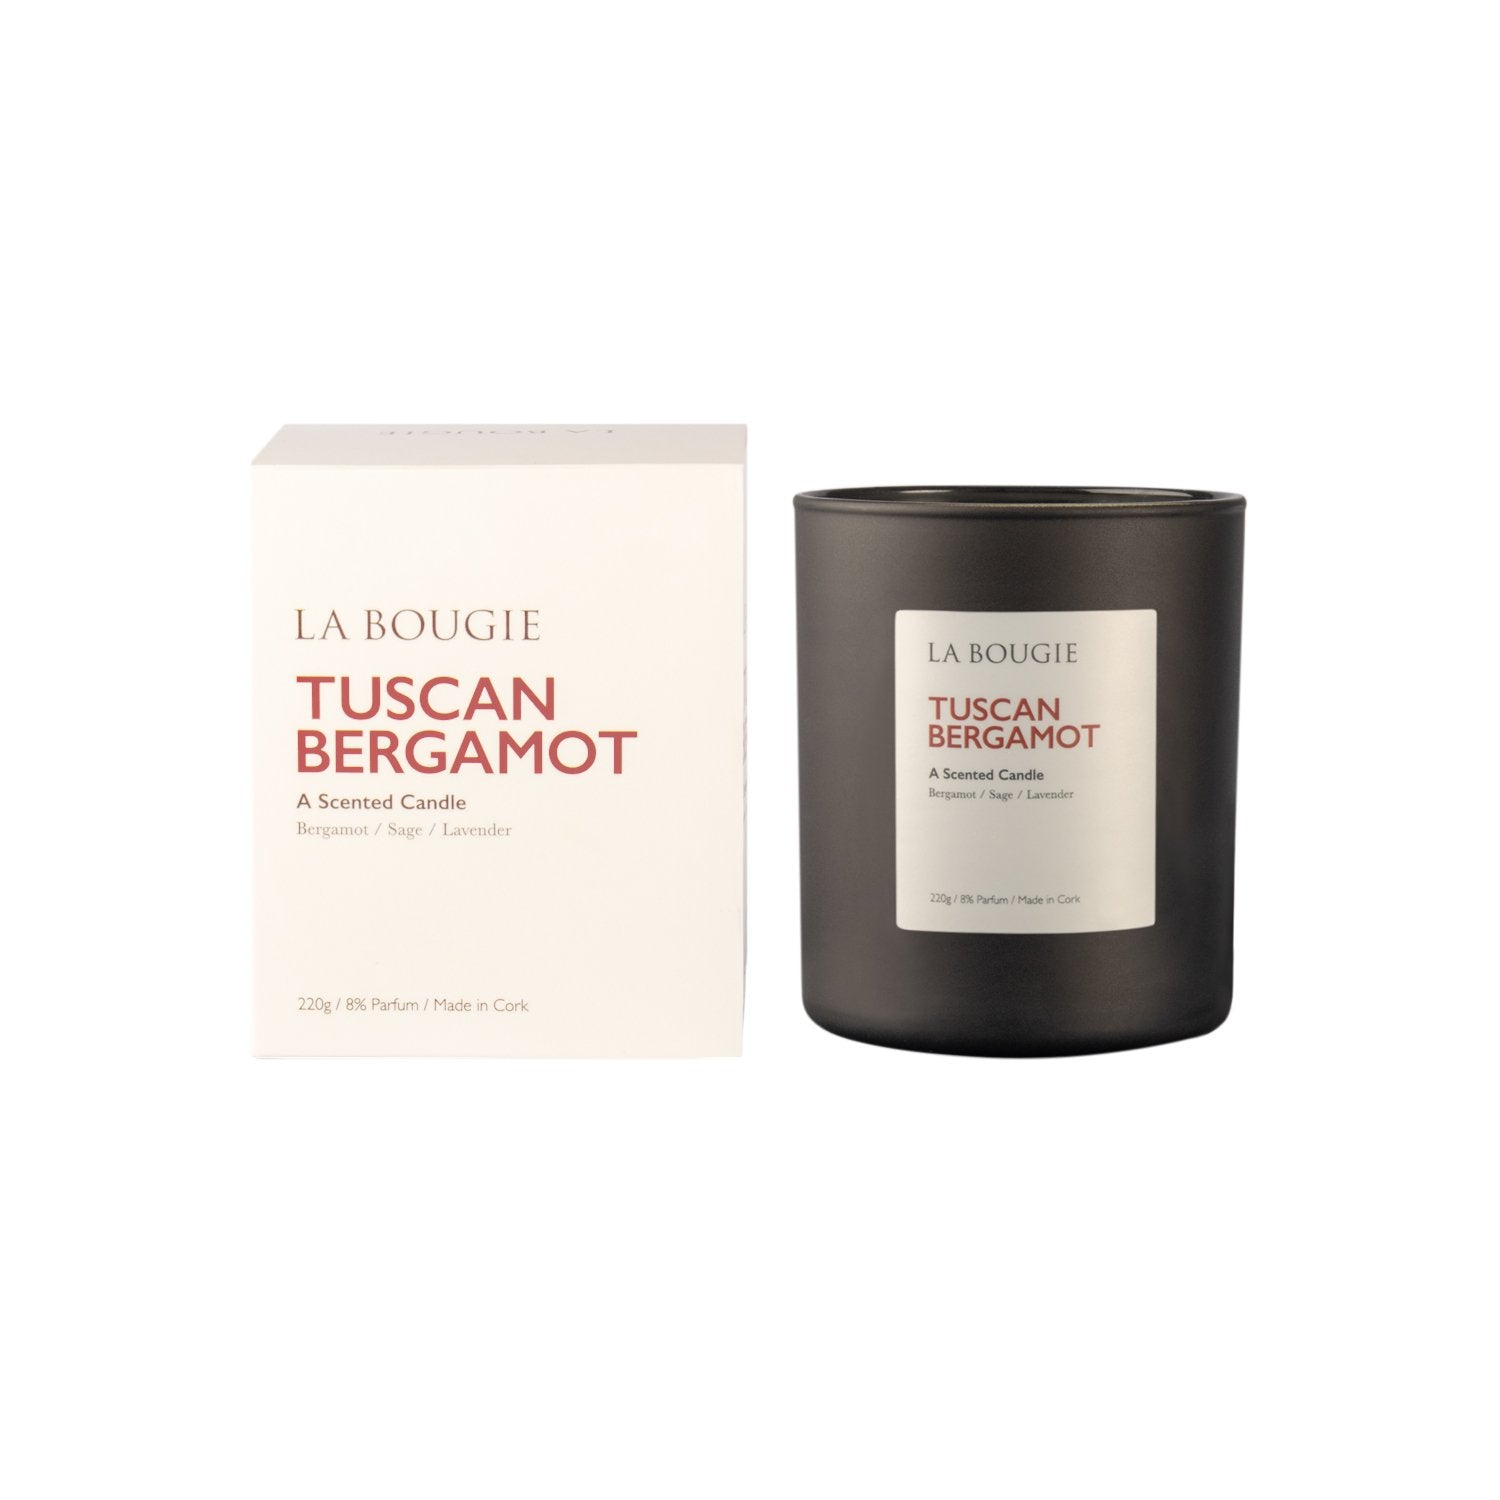 La Bougie Tuscan Bergamot Candle